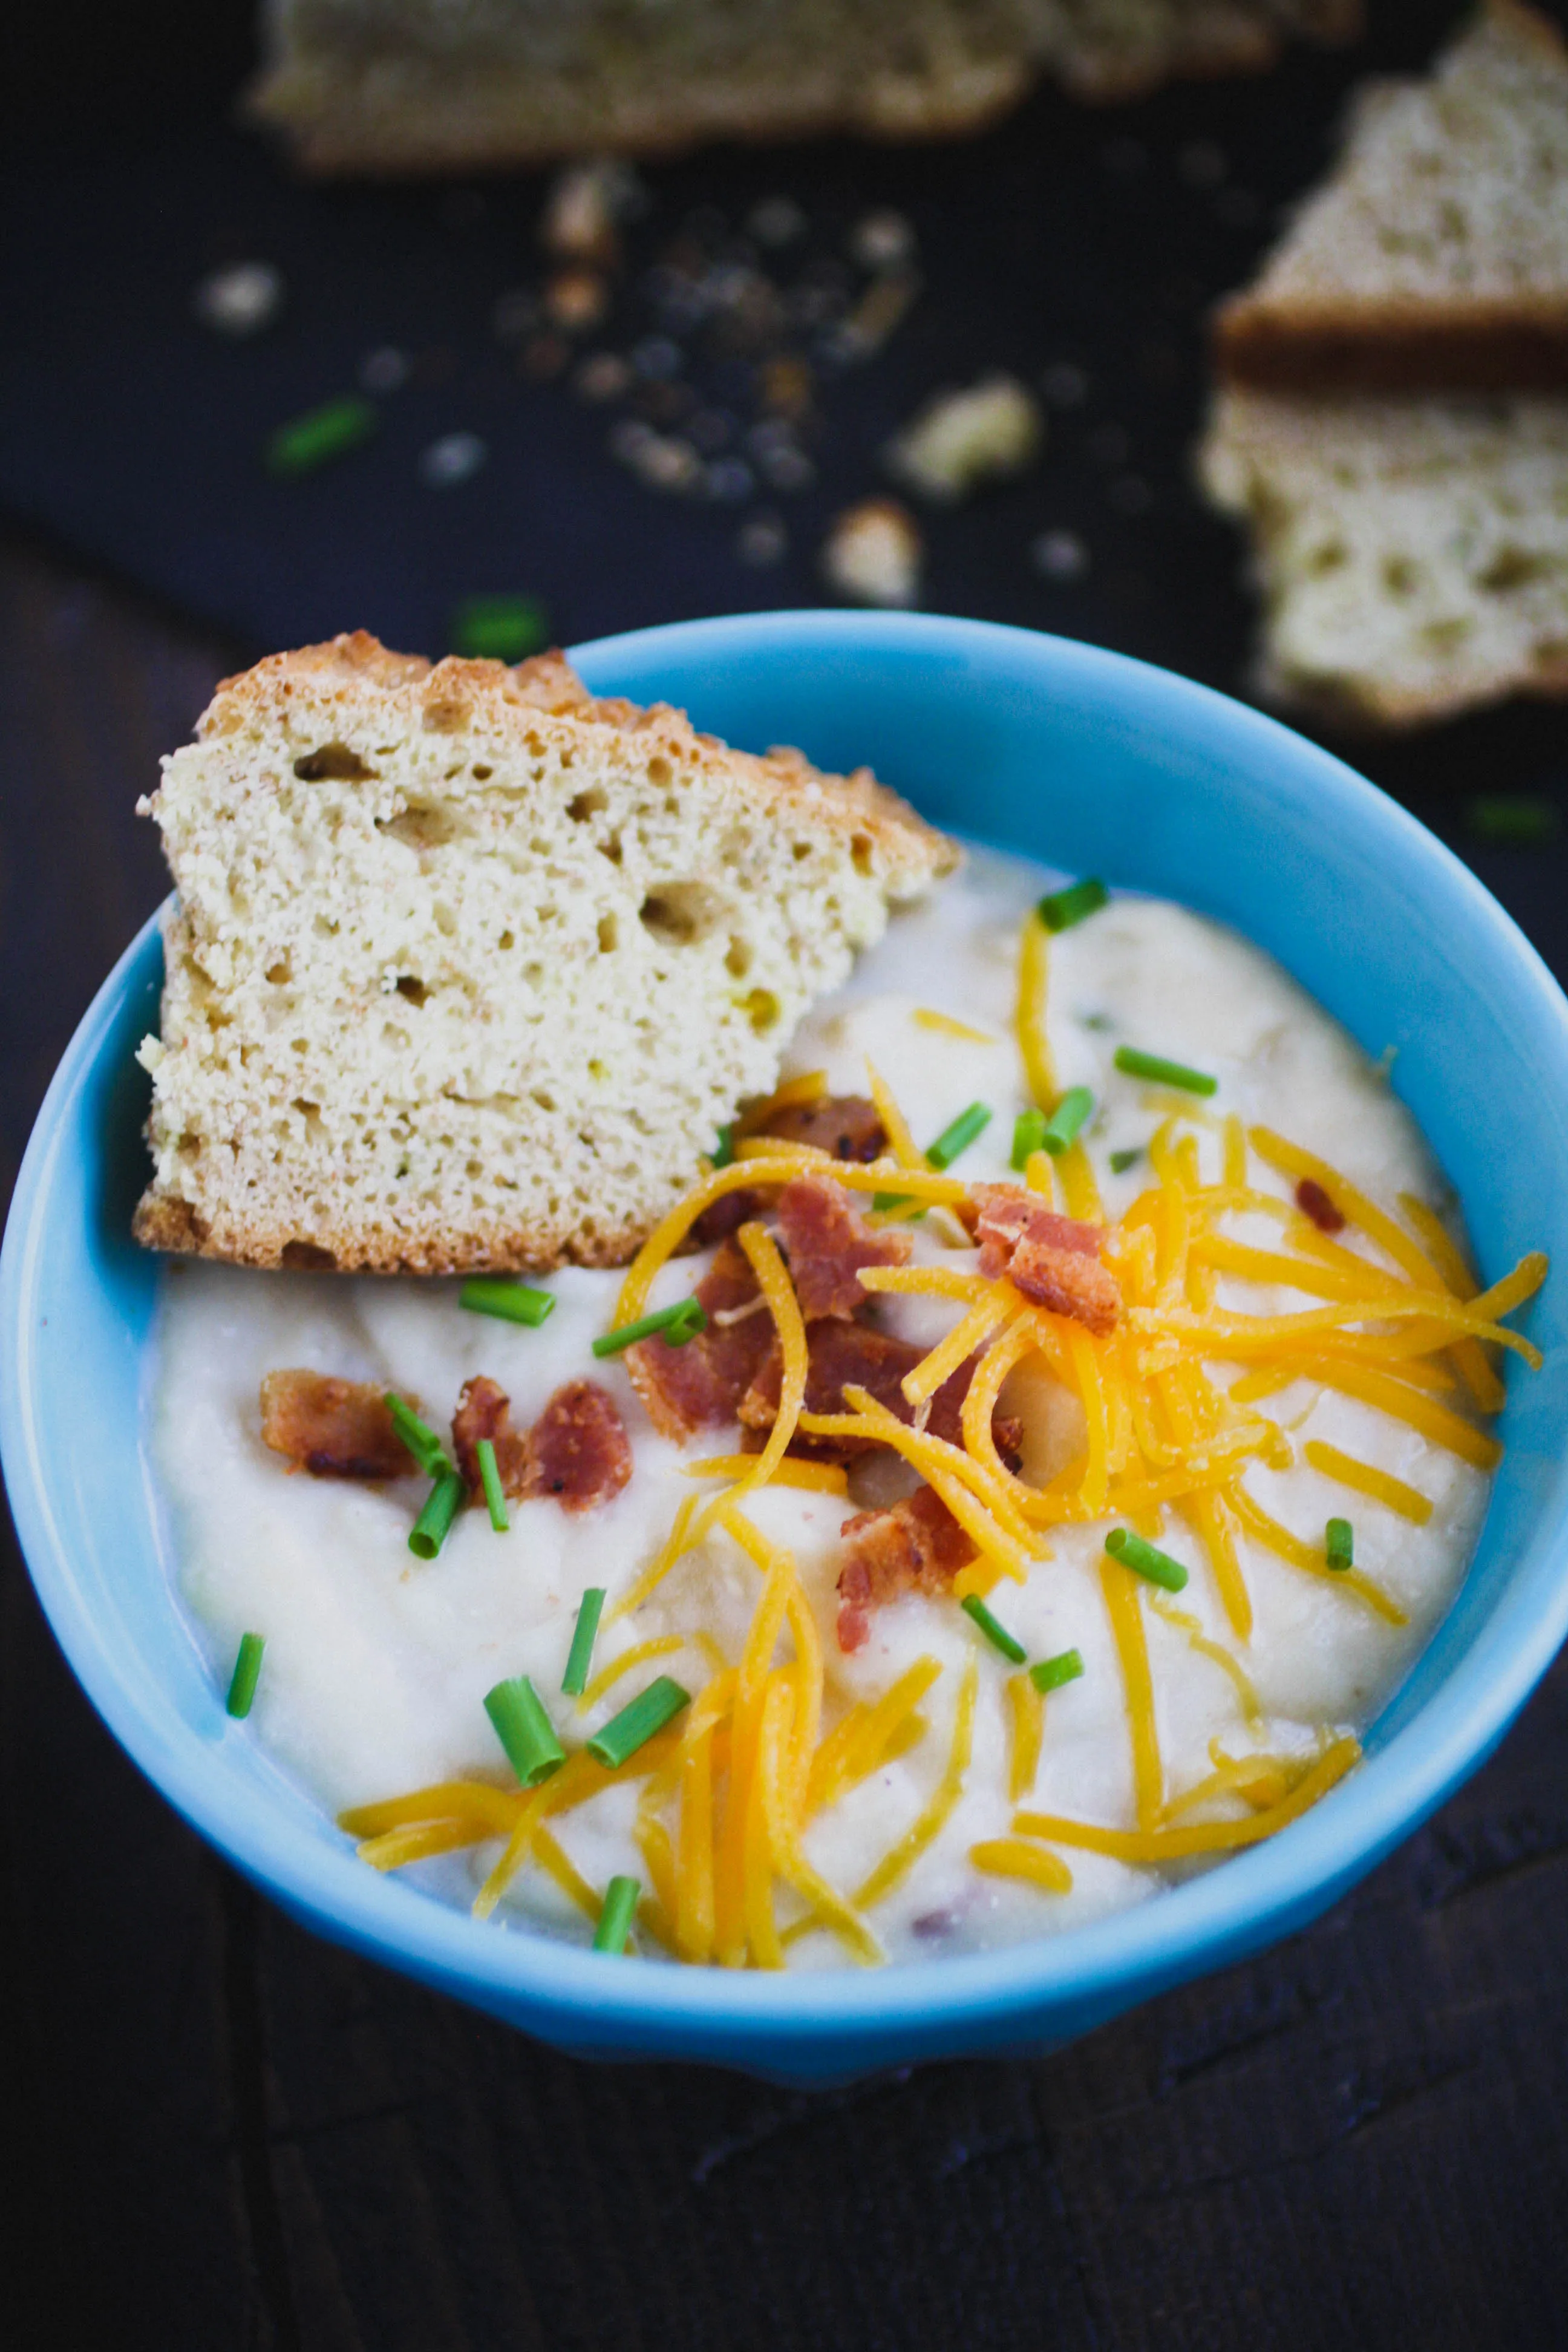 Loaded Baked Potato Soup is ideas to serve on St. Patrick's Day! You'll enjoy a big bowl of Loaded Baked Potato Soup.